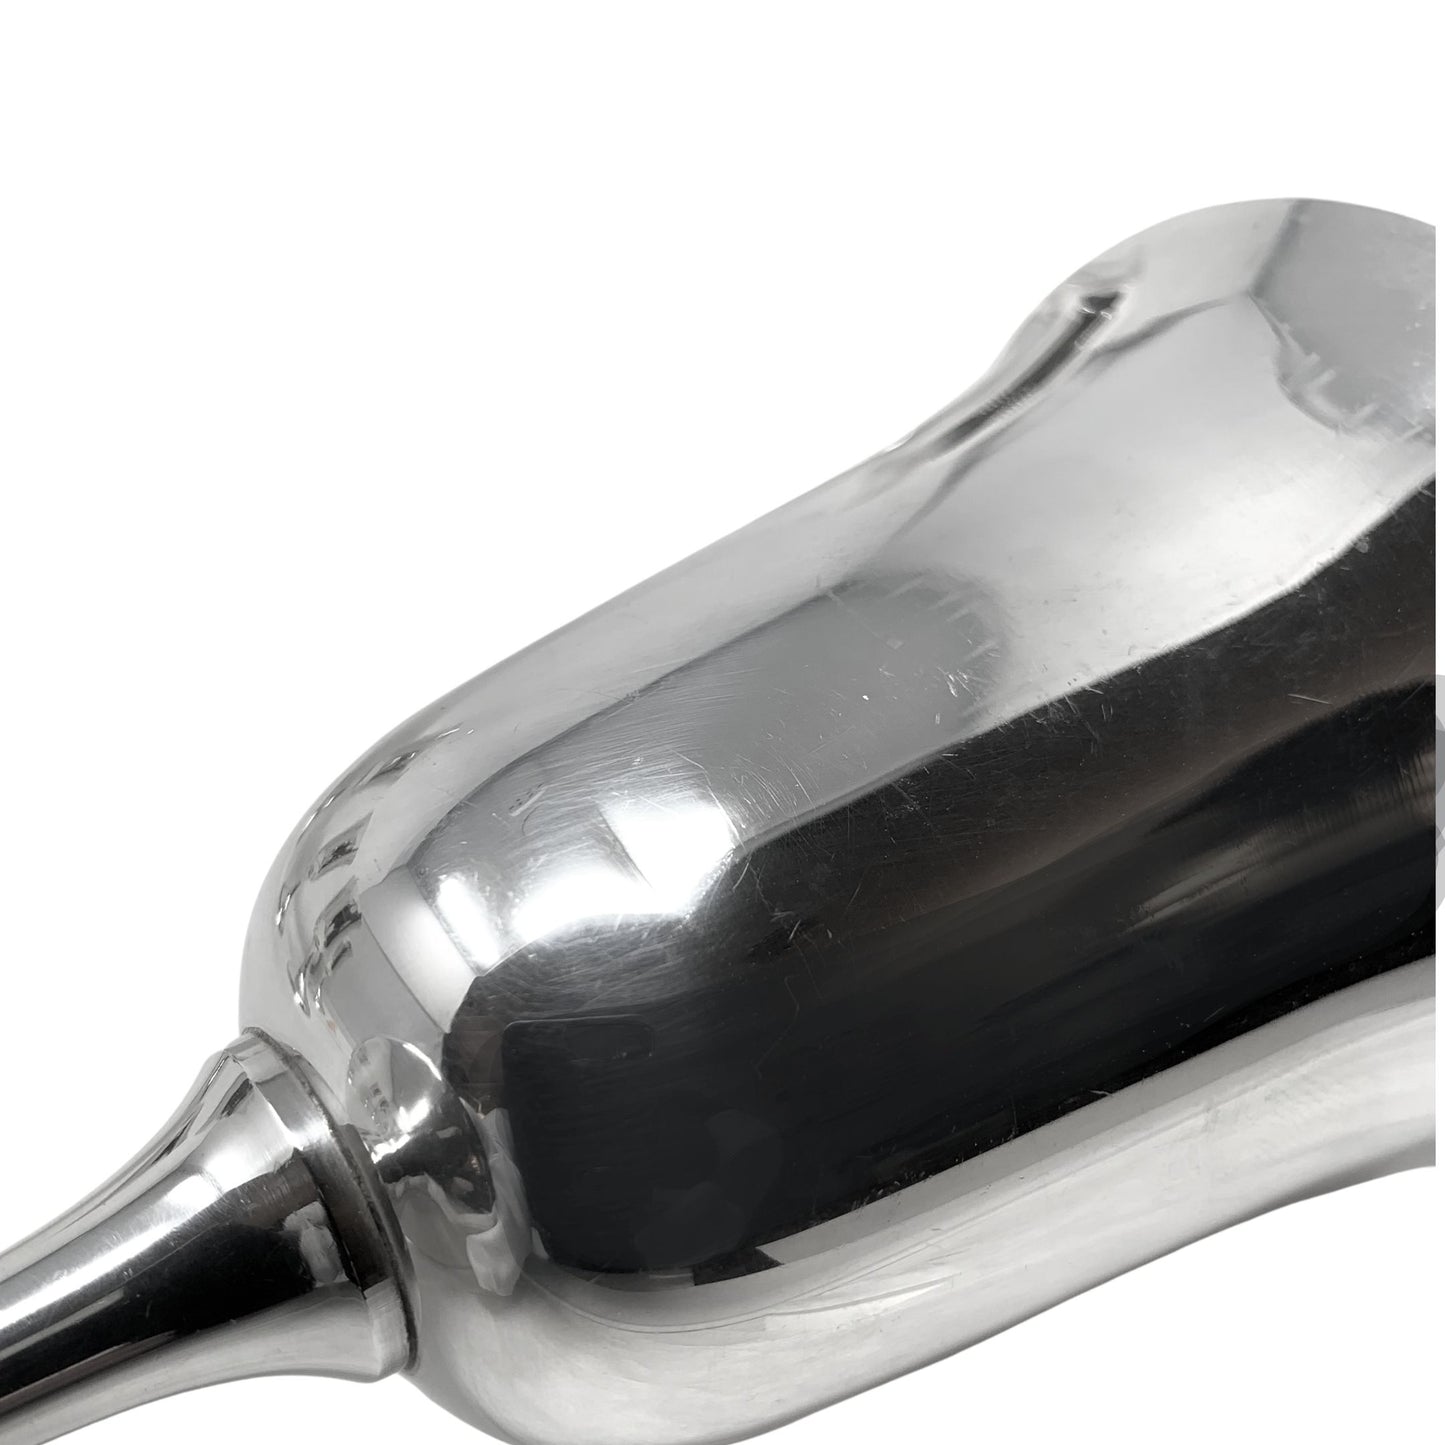 Stieff Sterling Silver Wine/Water Goblets (6)